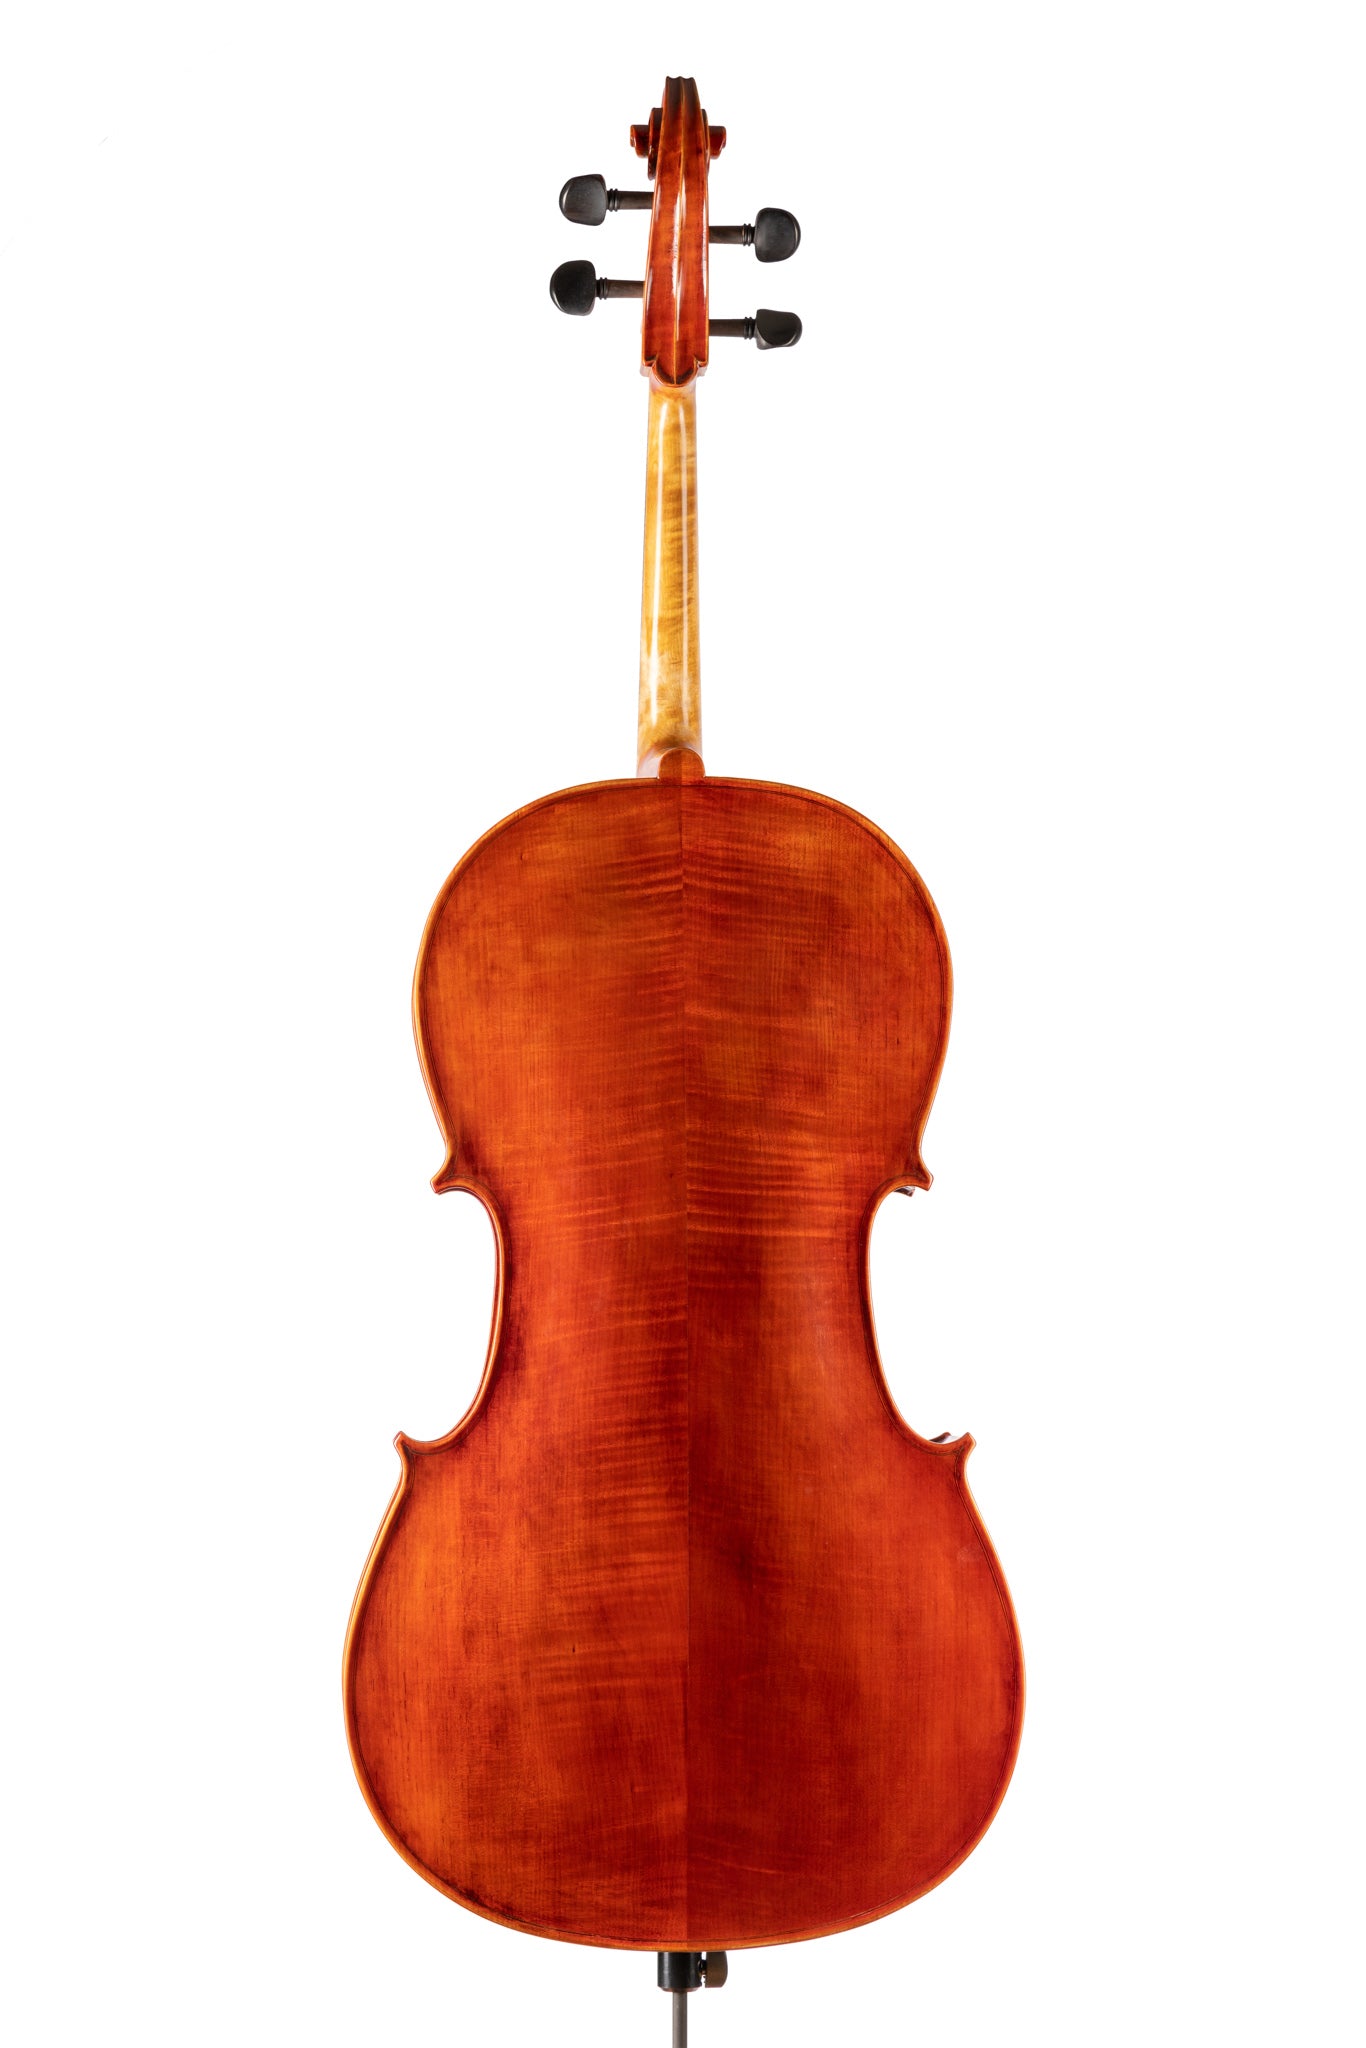 WY-250 Cello